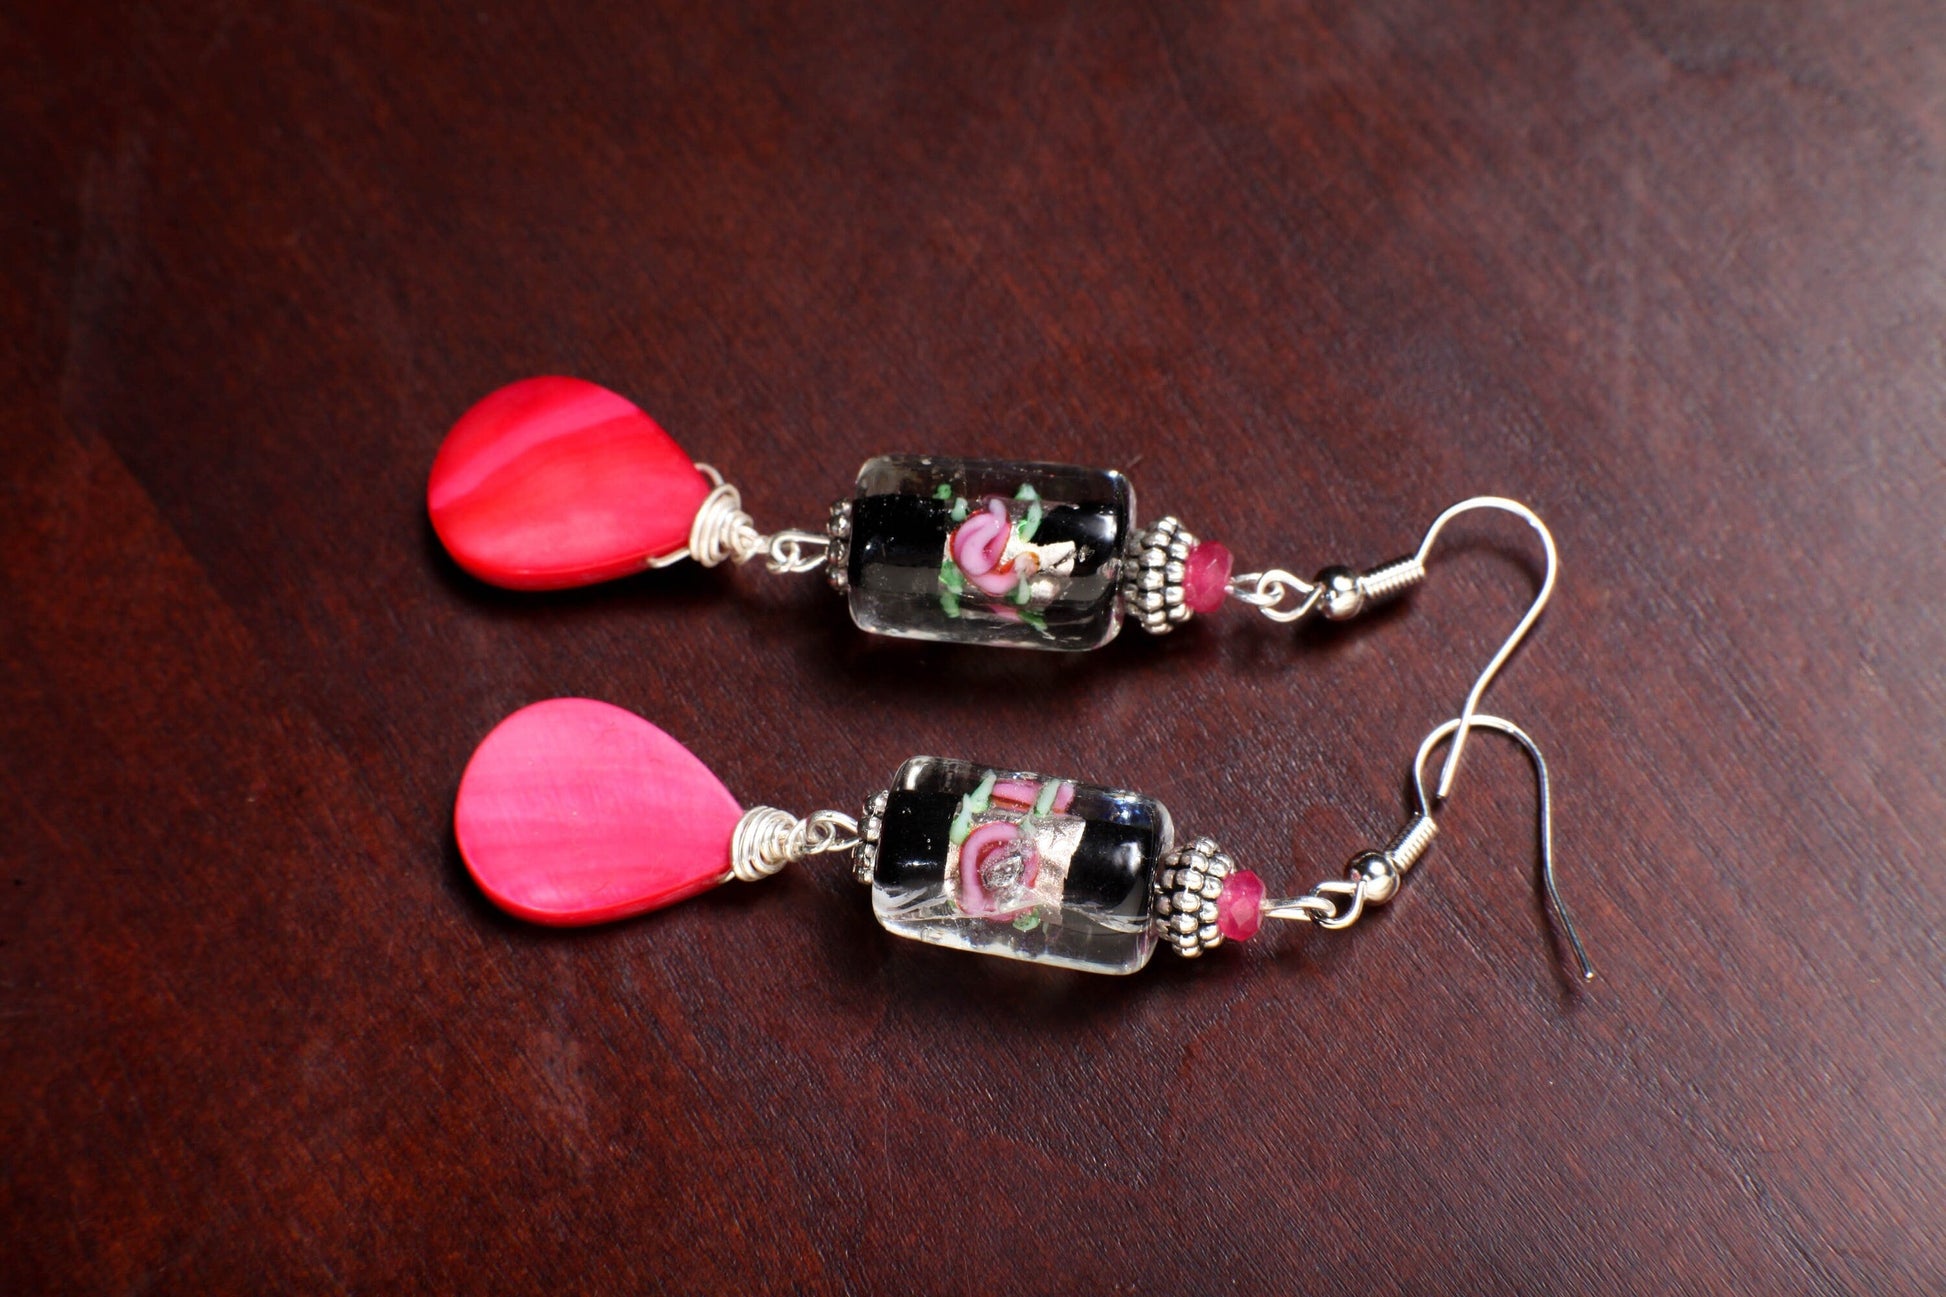 Mother of Pearl Shell 14x20mm Earrings, Wire Wrapped Pink Sea Shell Pear Drop with Dangling Silver Foil Flower Lamp Work Earwire Earrings